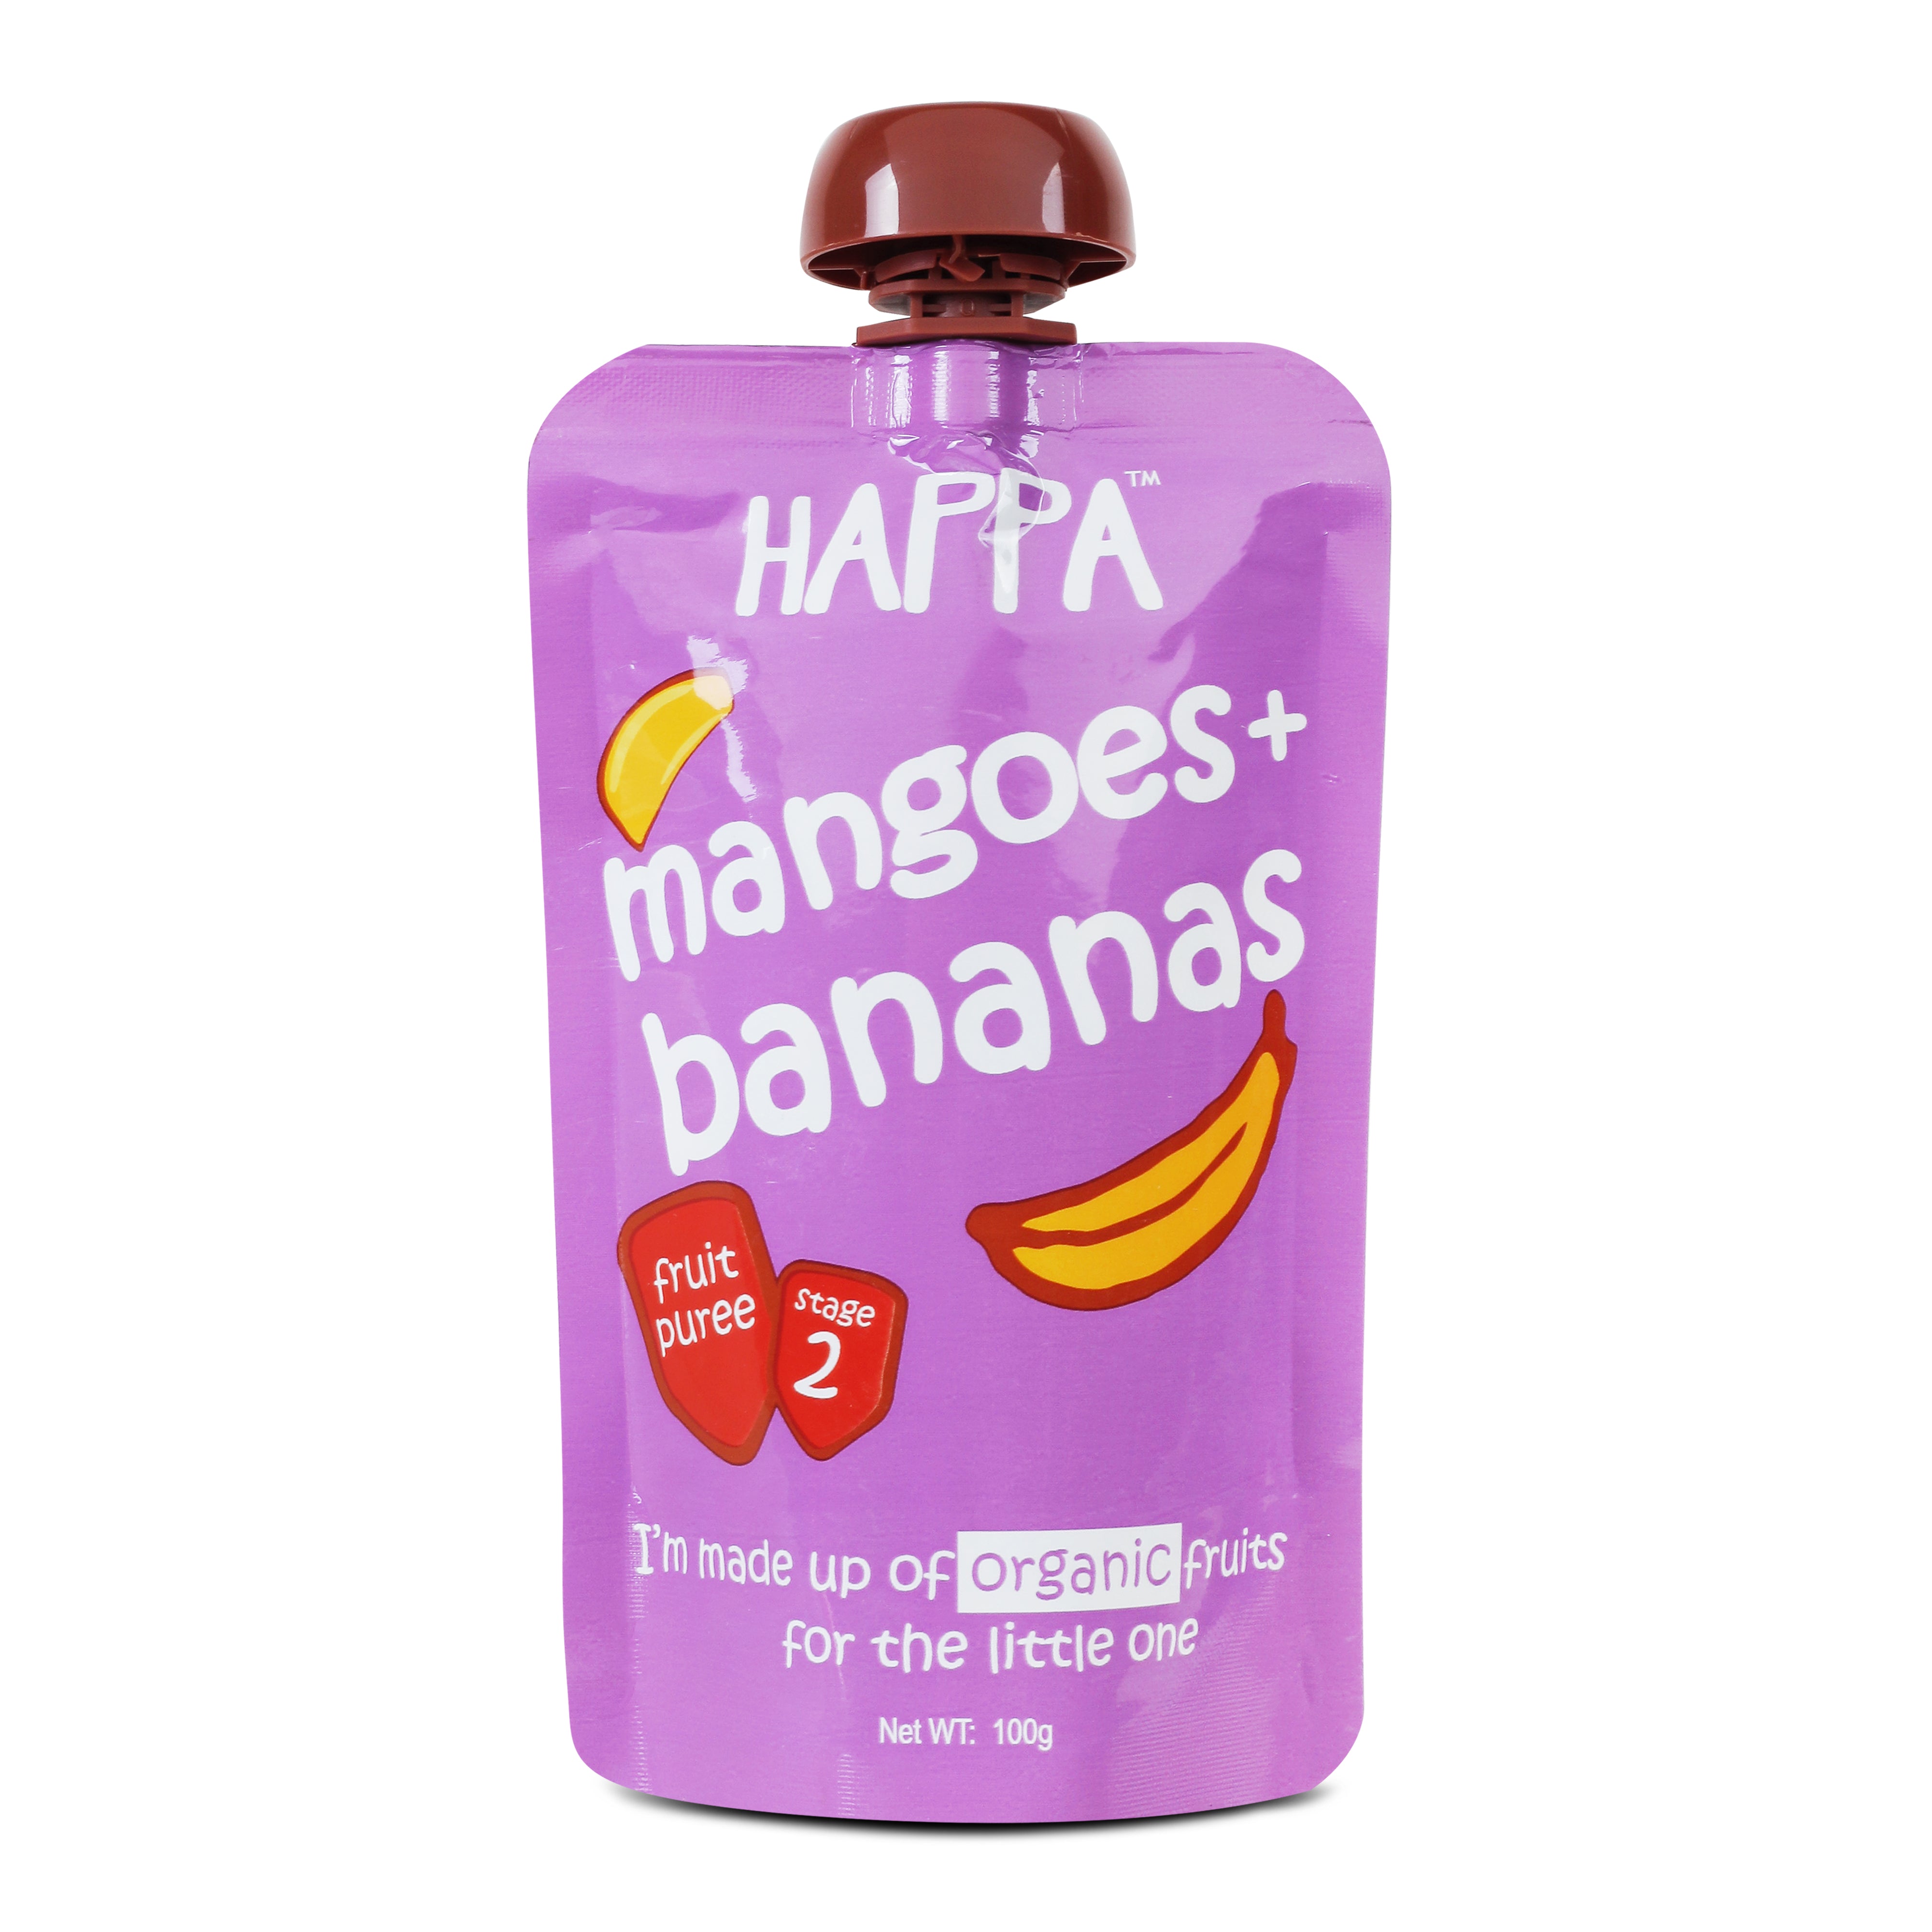 organic mango and banana fruit puree